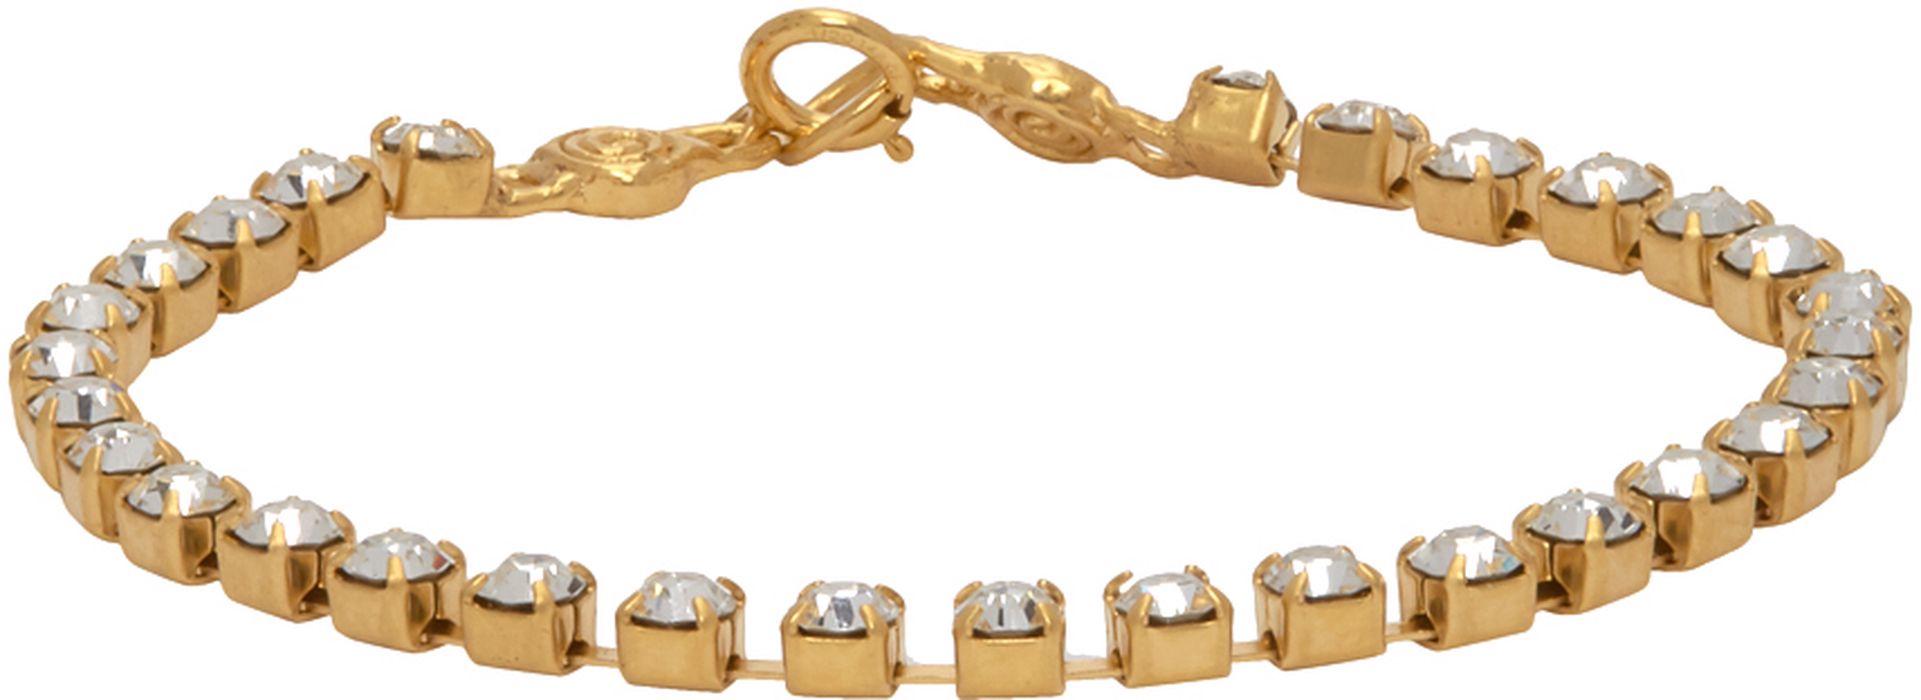 Mondo Mondo Gold Crystal Bracelet